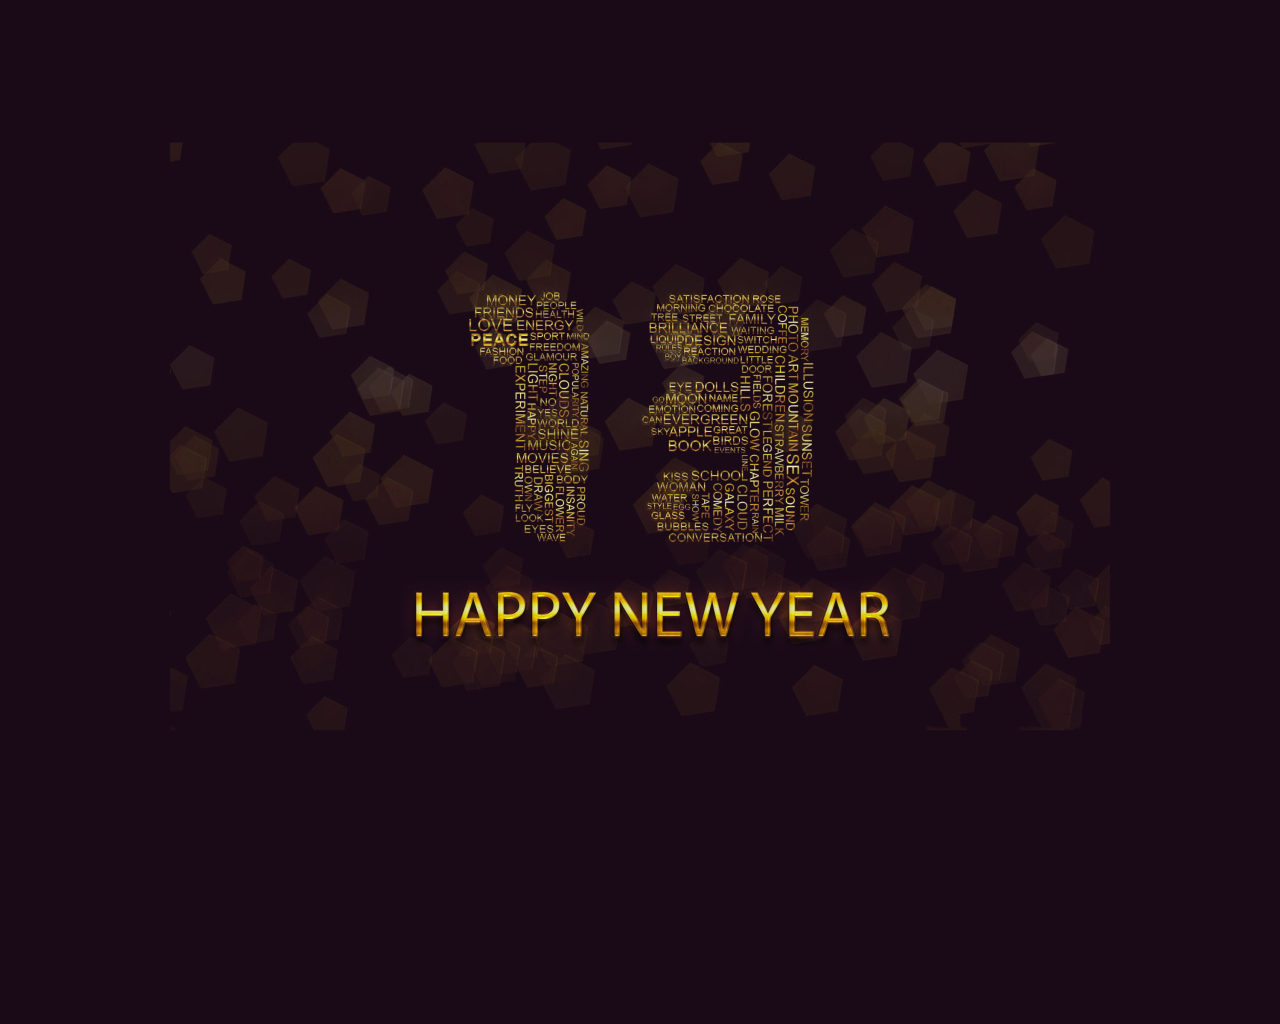 Happy New Year 2013 wallpaper 1280x1024